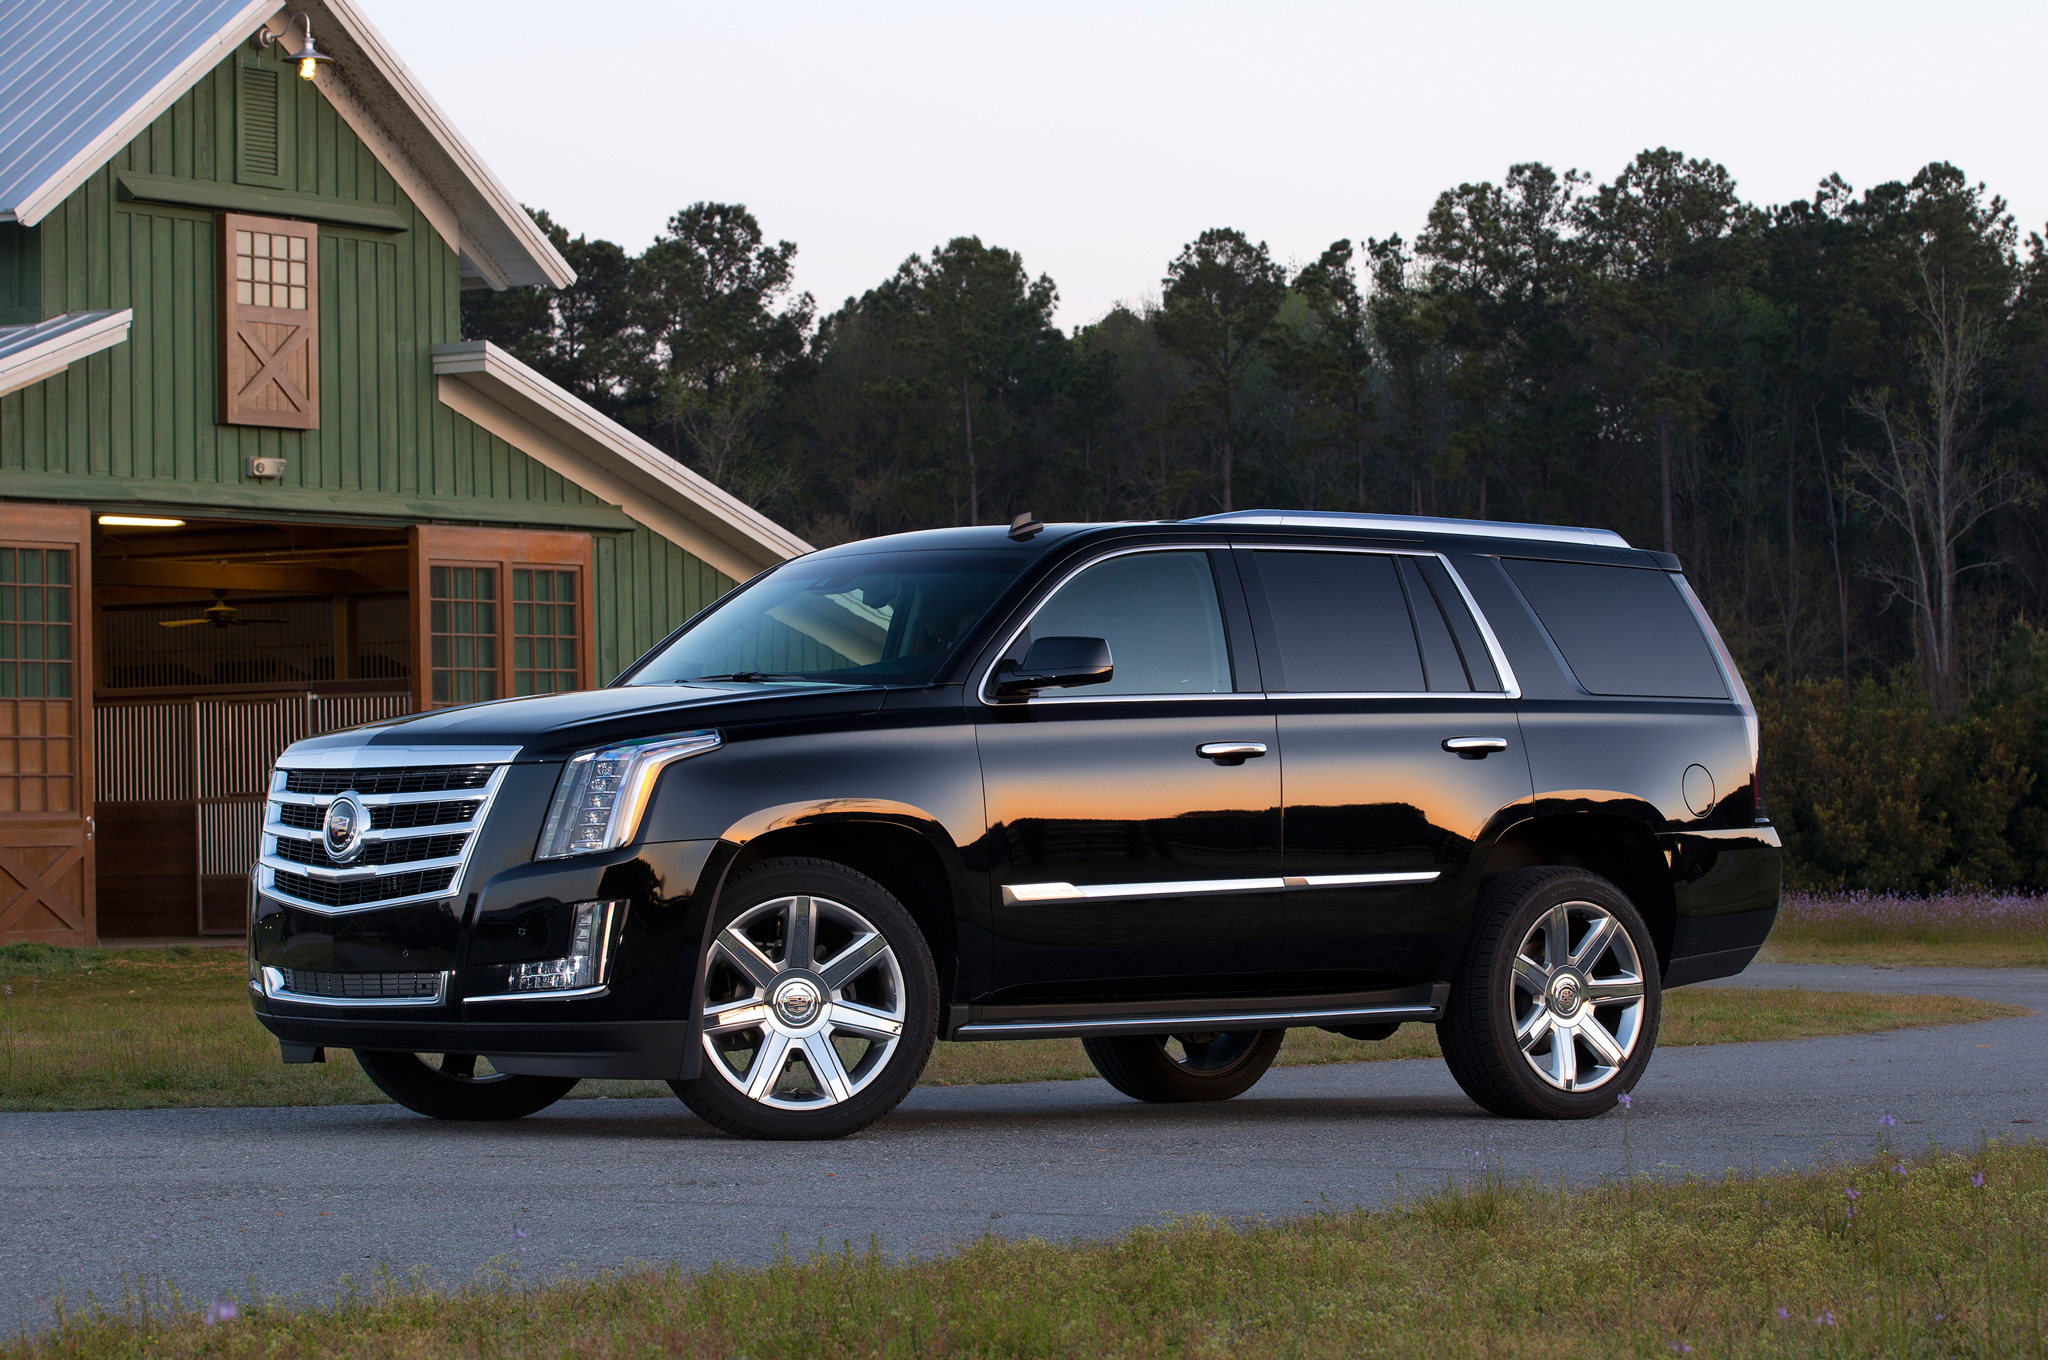 Cadillac 2015 escalade opening a new generation of luxury SUVs #8